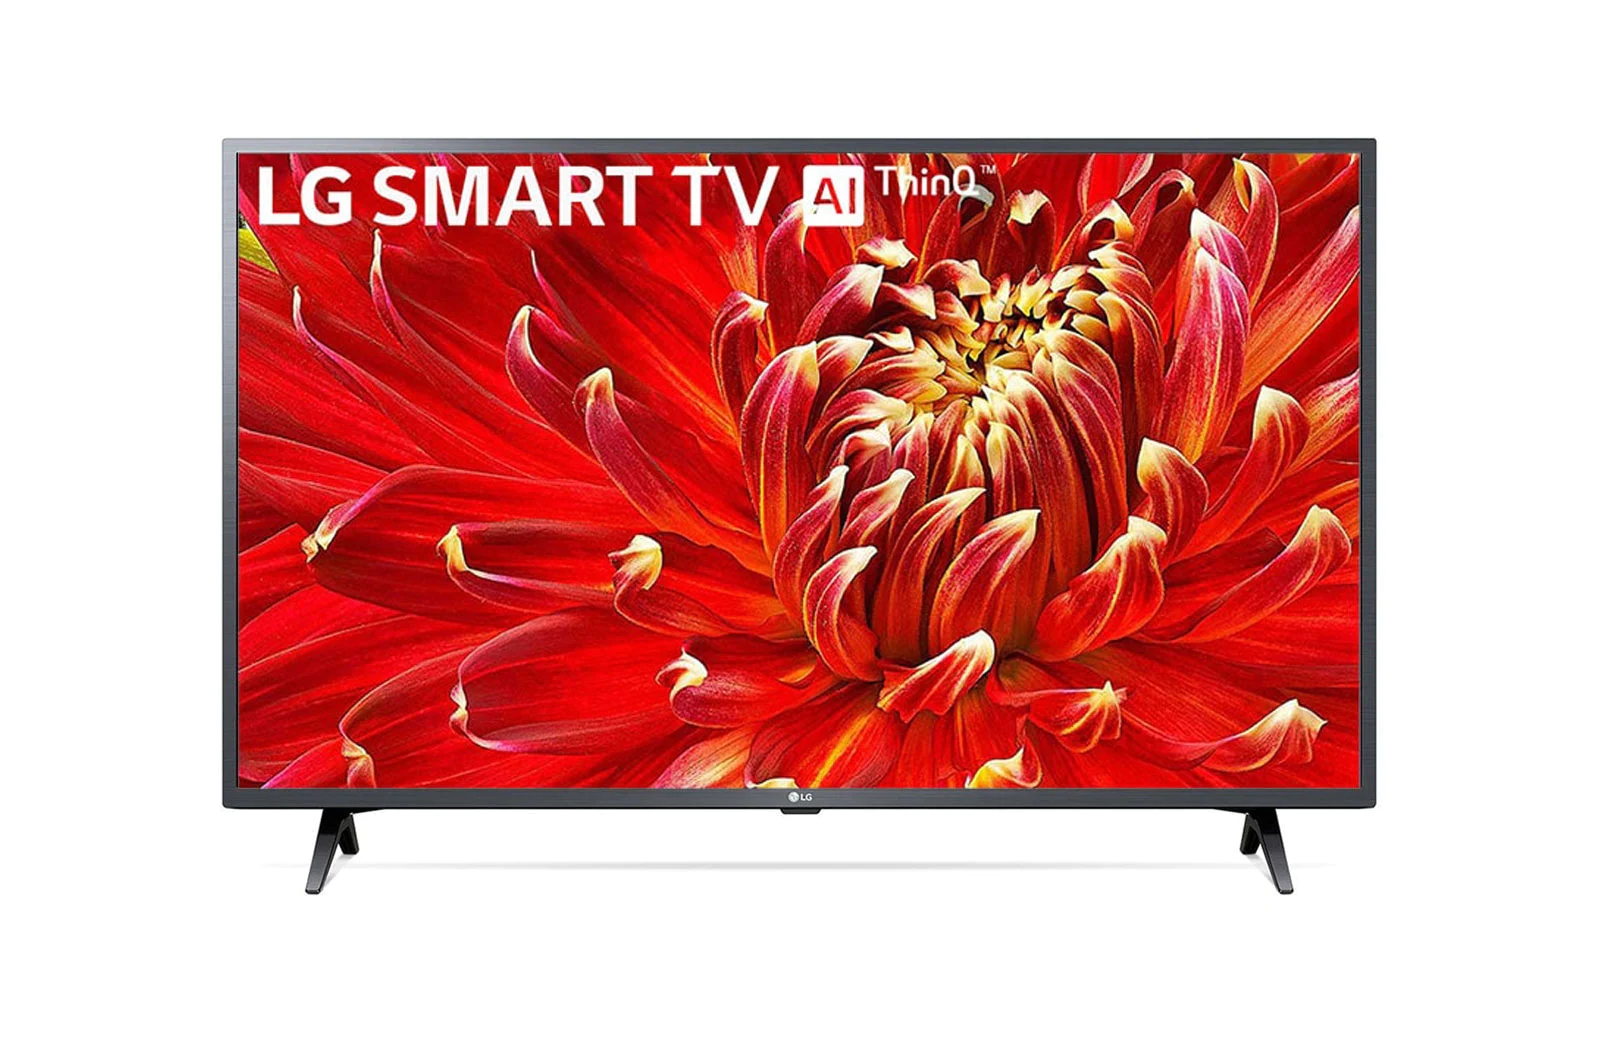 LG-LED-Smart-TV-43-inch-LM6300-Series-Full-HD-HDR-Smart-LED-TV.webp